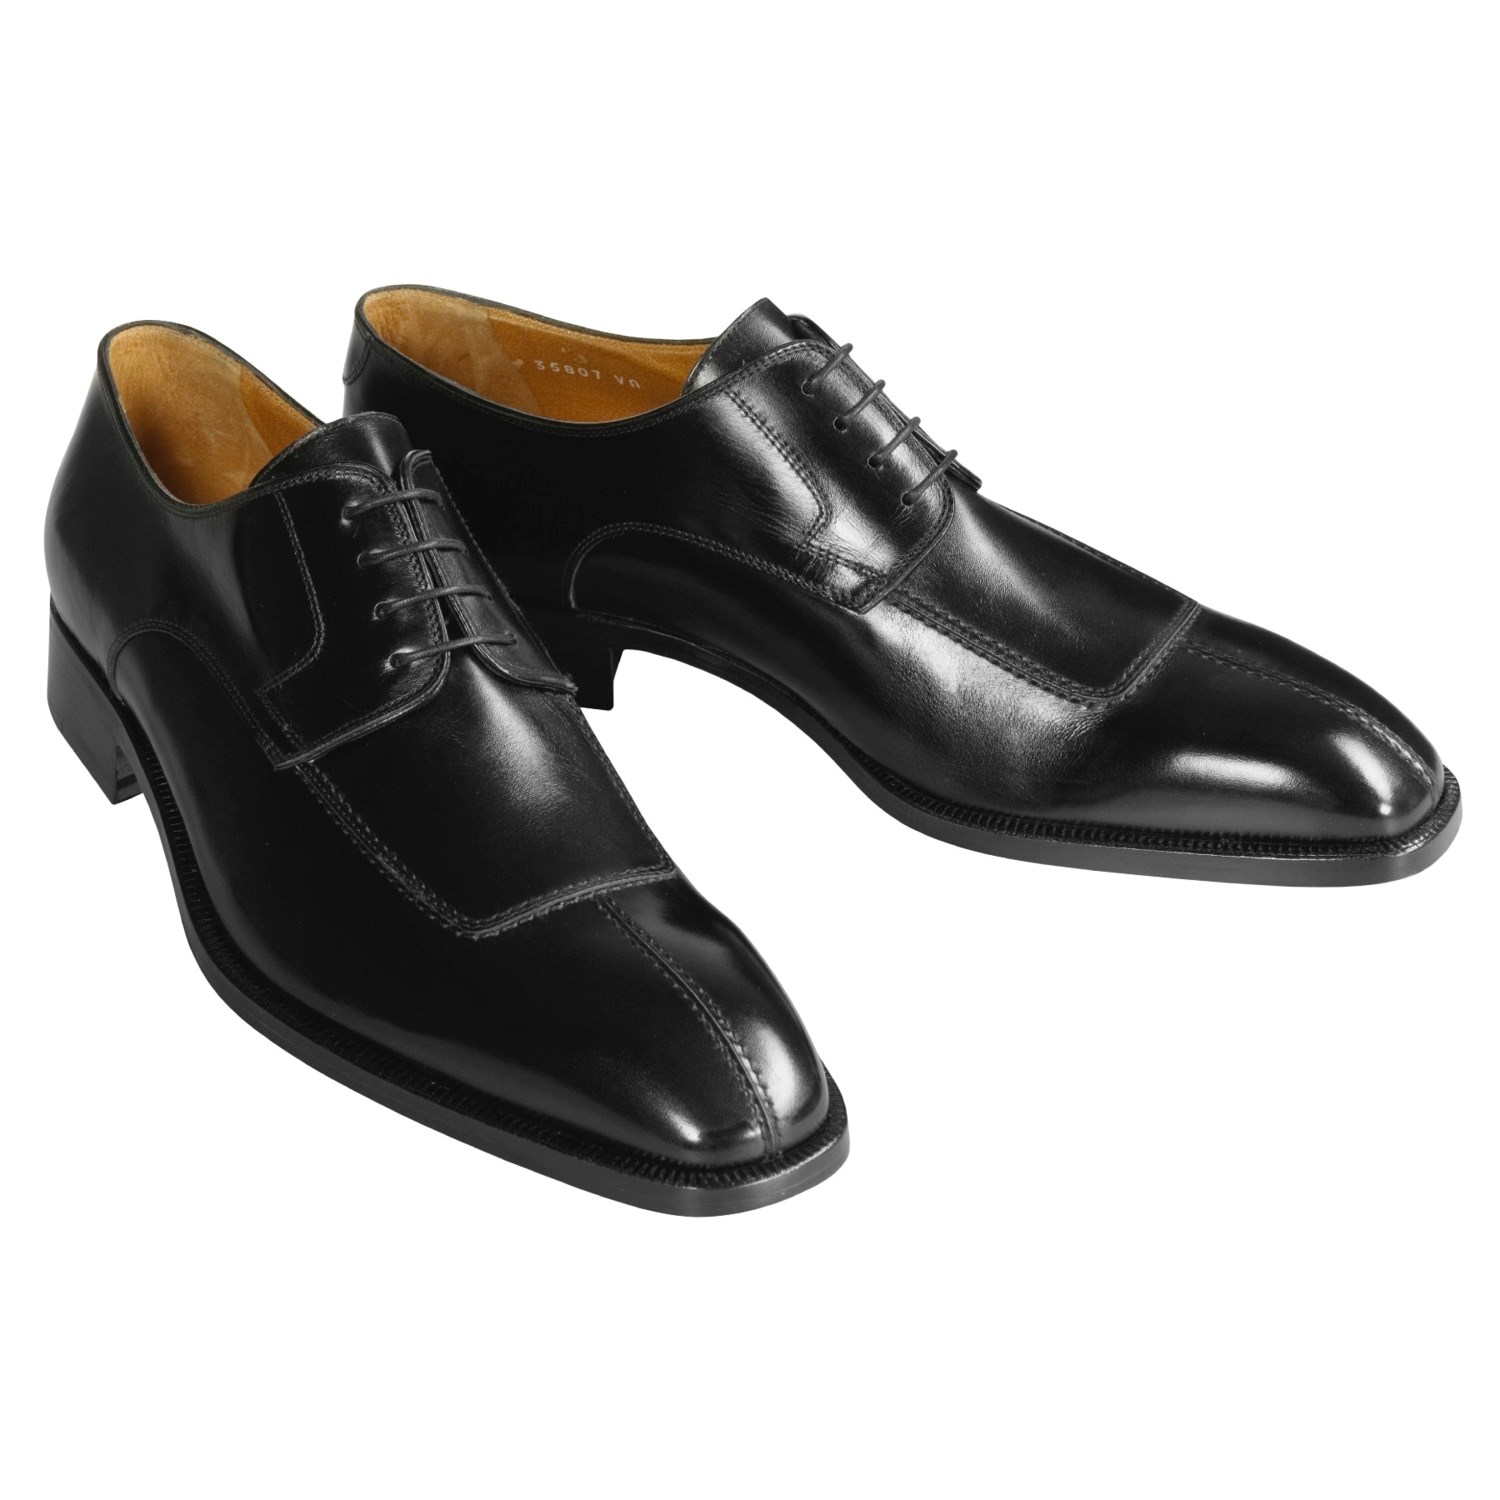 Moreschi Mirano Shoes (For Men) 80930 - Save 47%